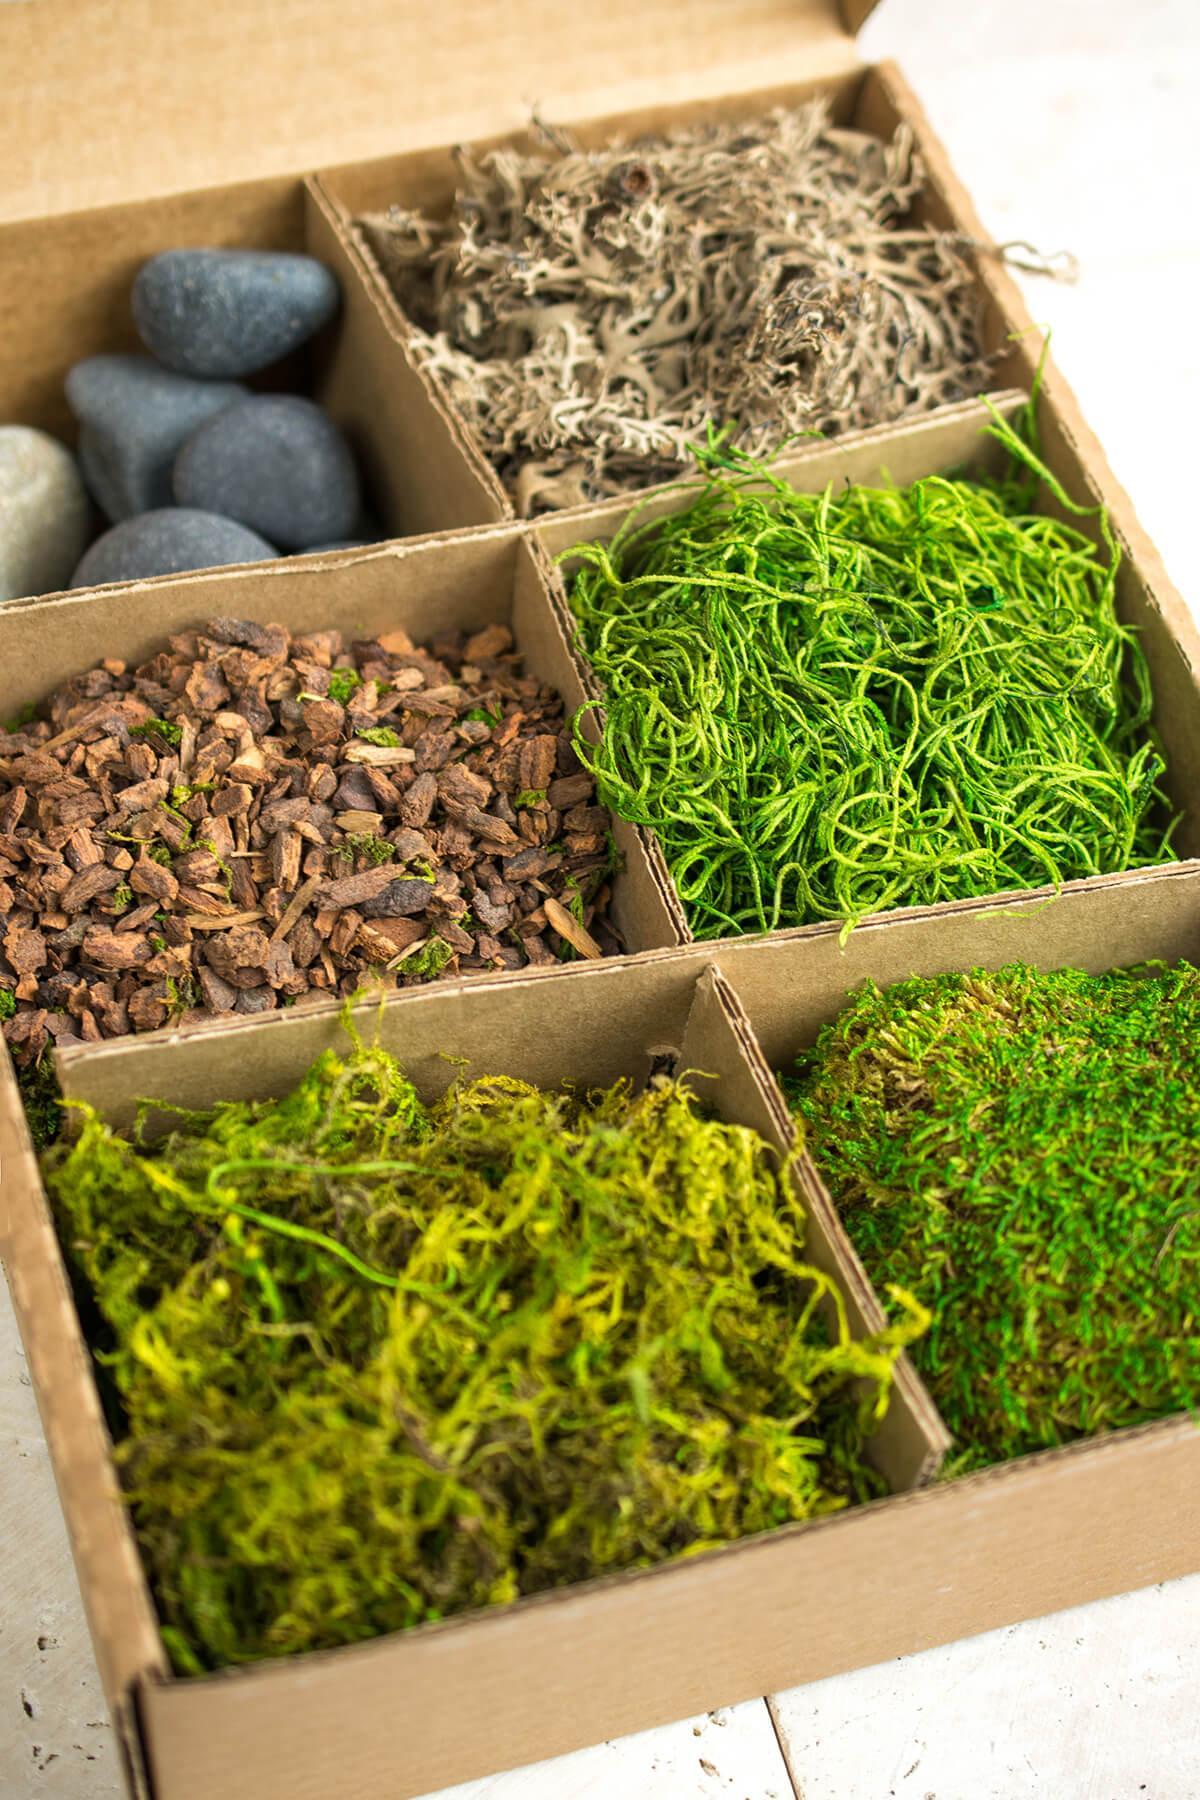 Terrarium Kit with Bark, Stones, Lichen, and Moss